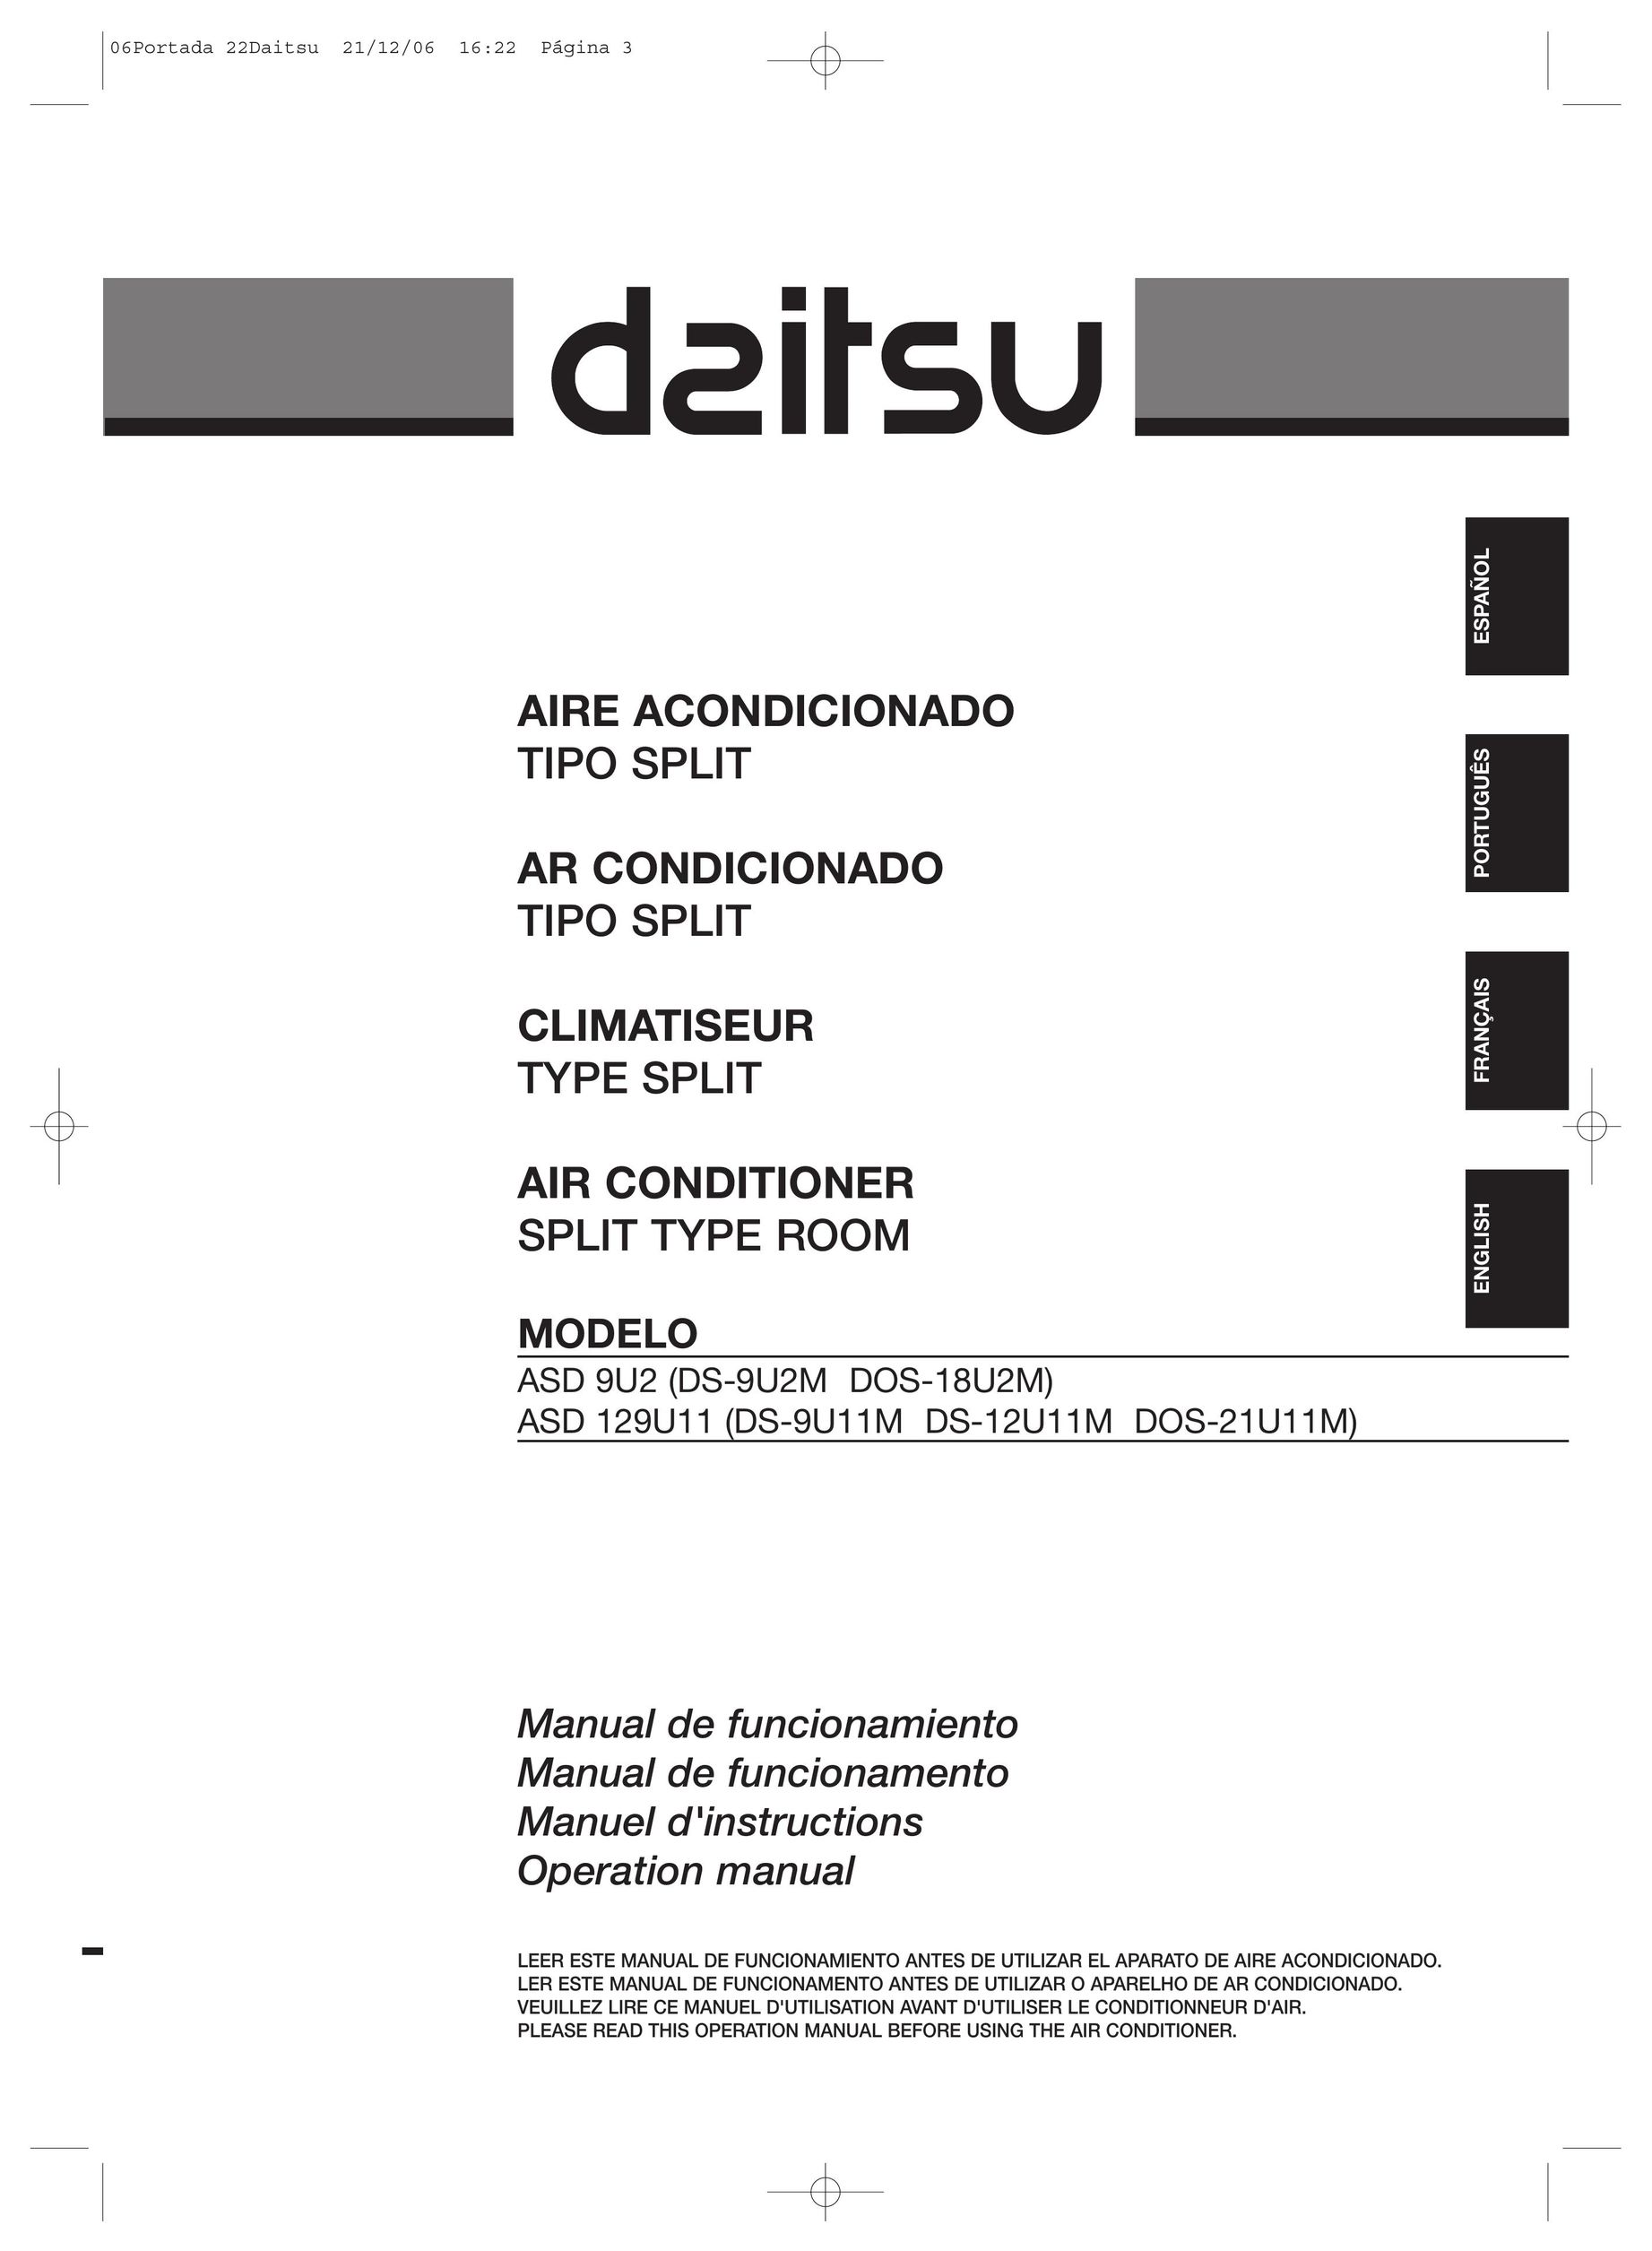 Daitsu ASD 9U2 Air Conditioner User Manual